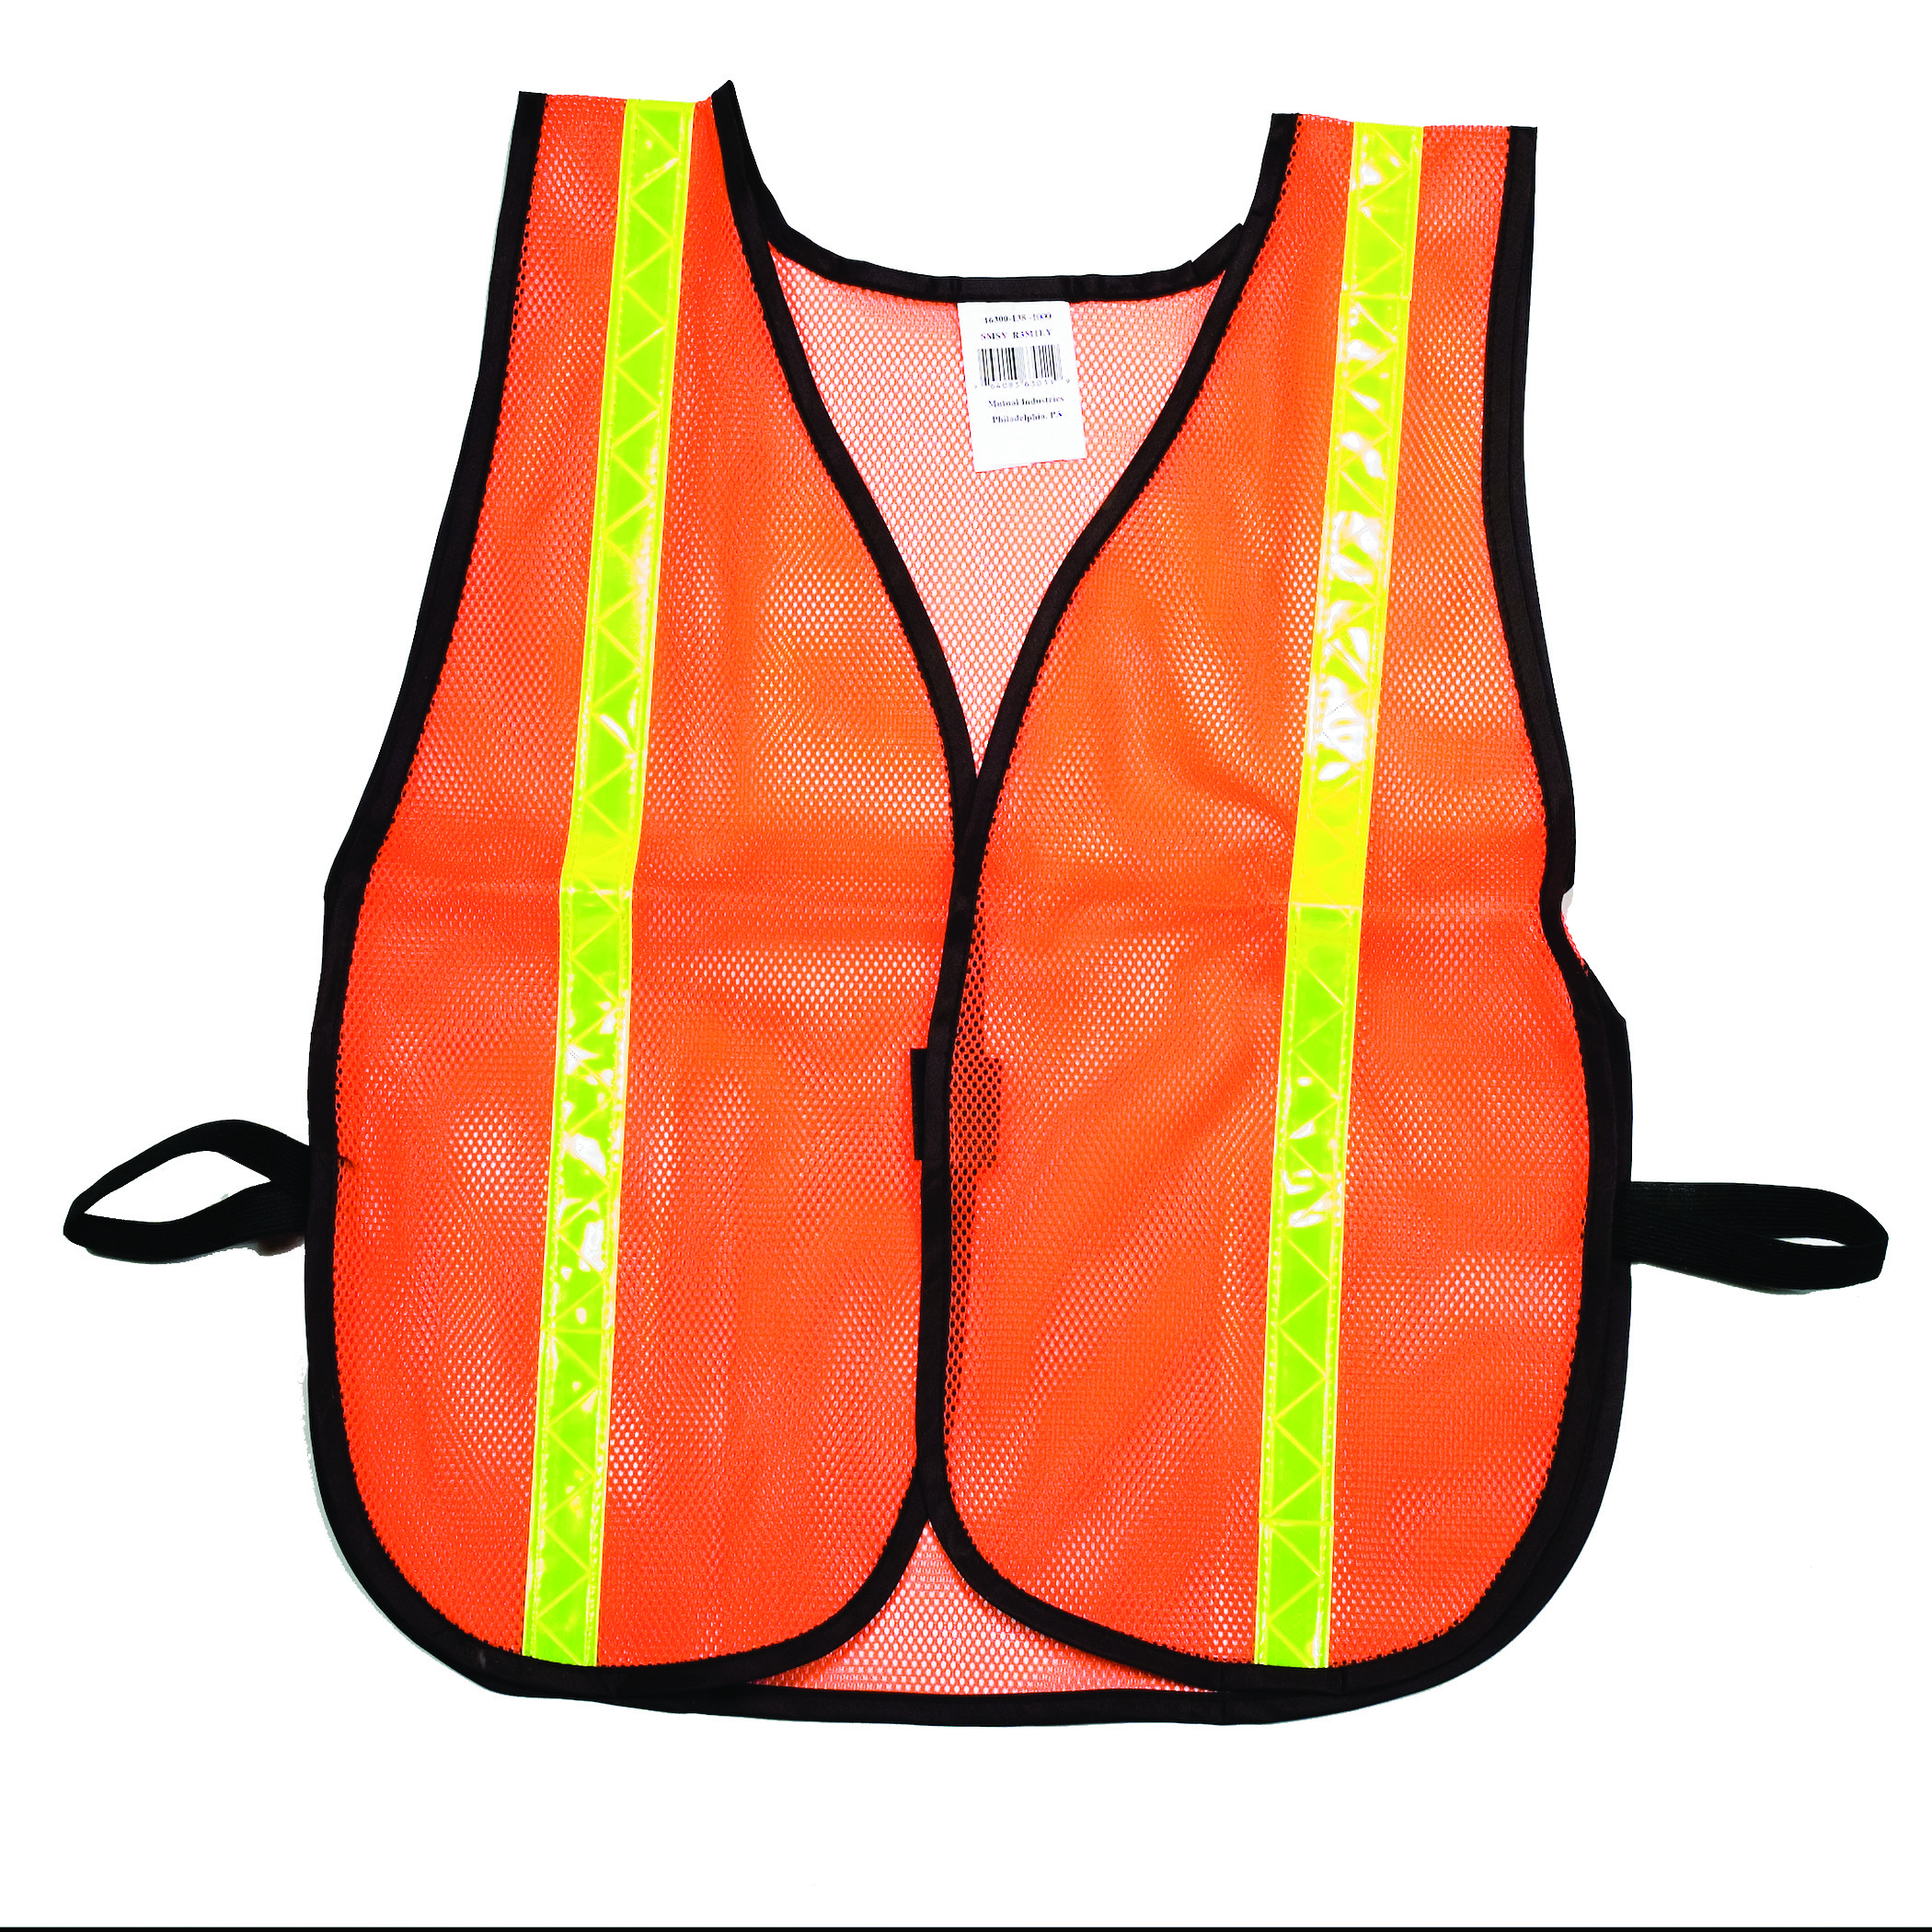 16300-138-1000, Orange Soft Mesh Safety Vest - 1 Lime/Yellow Reflective, MutualIndustries